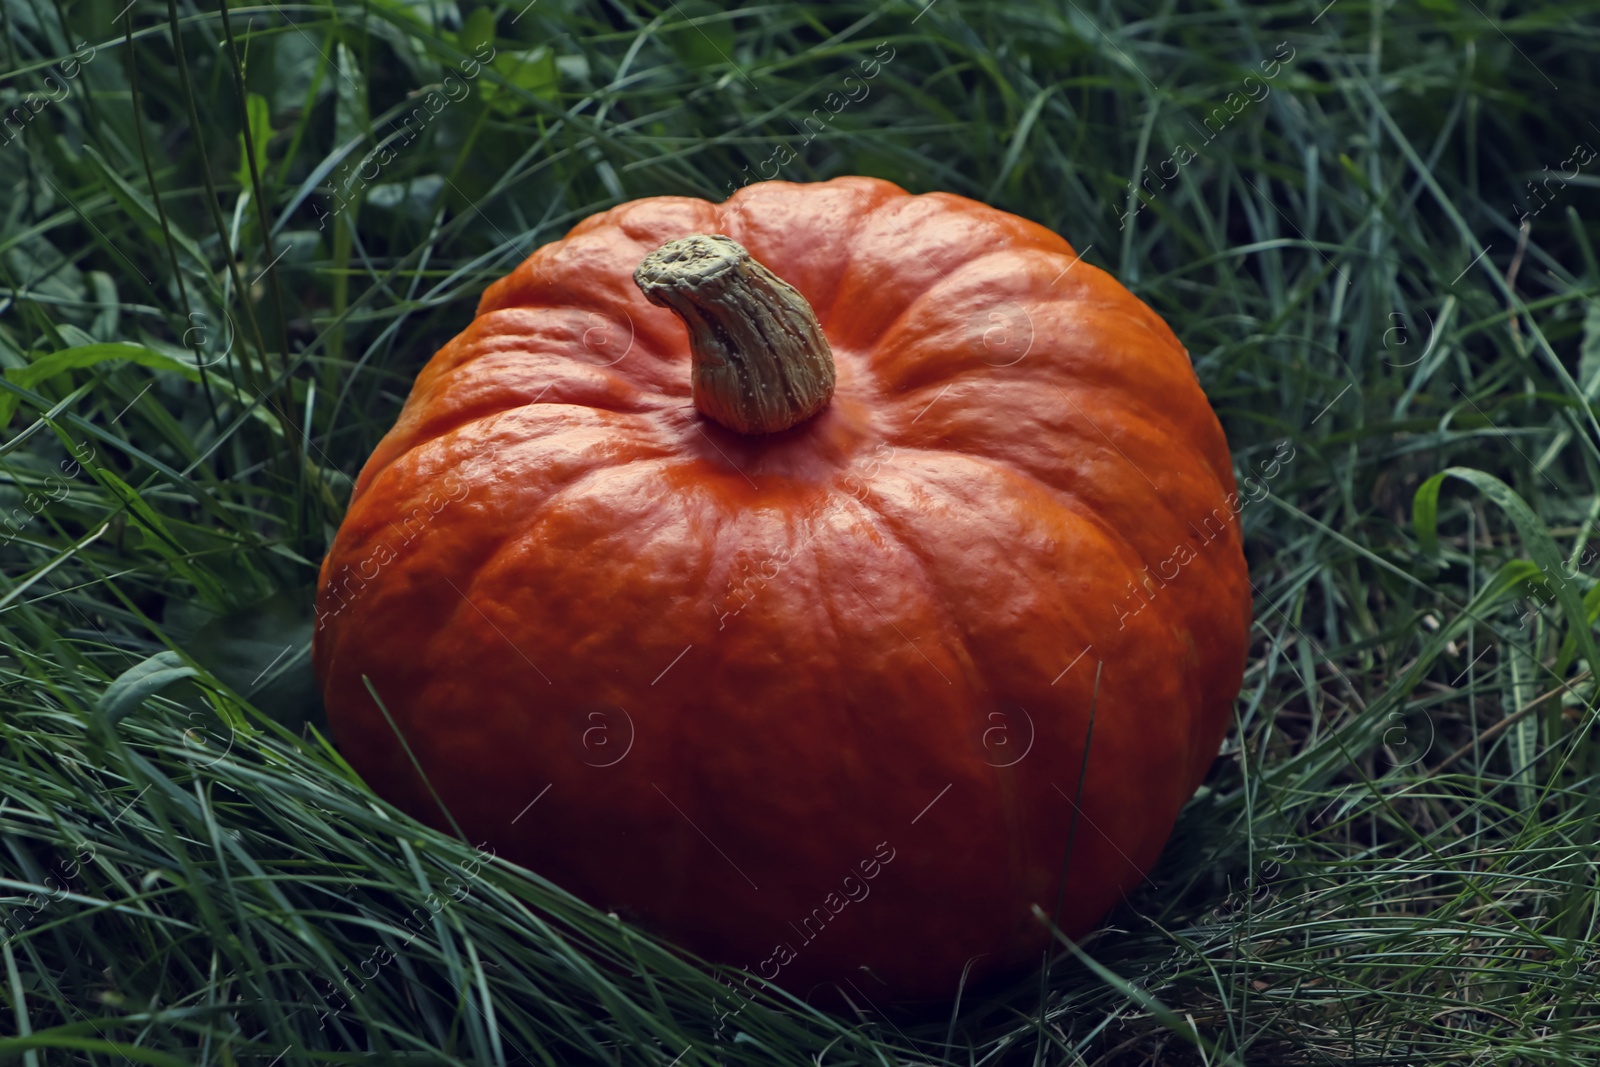 Photo of Ripe orange pumpkin among green grass outdoors, closeup